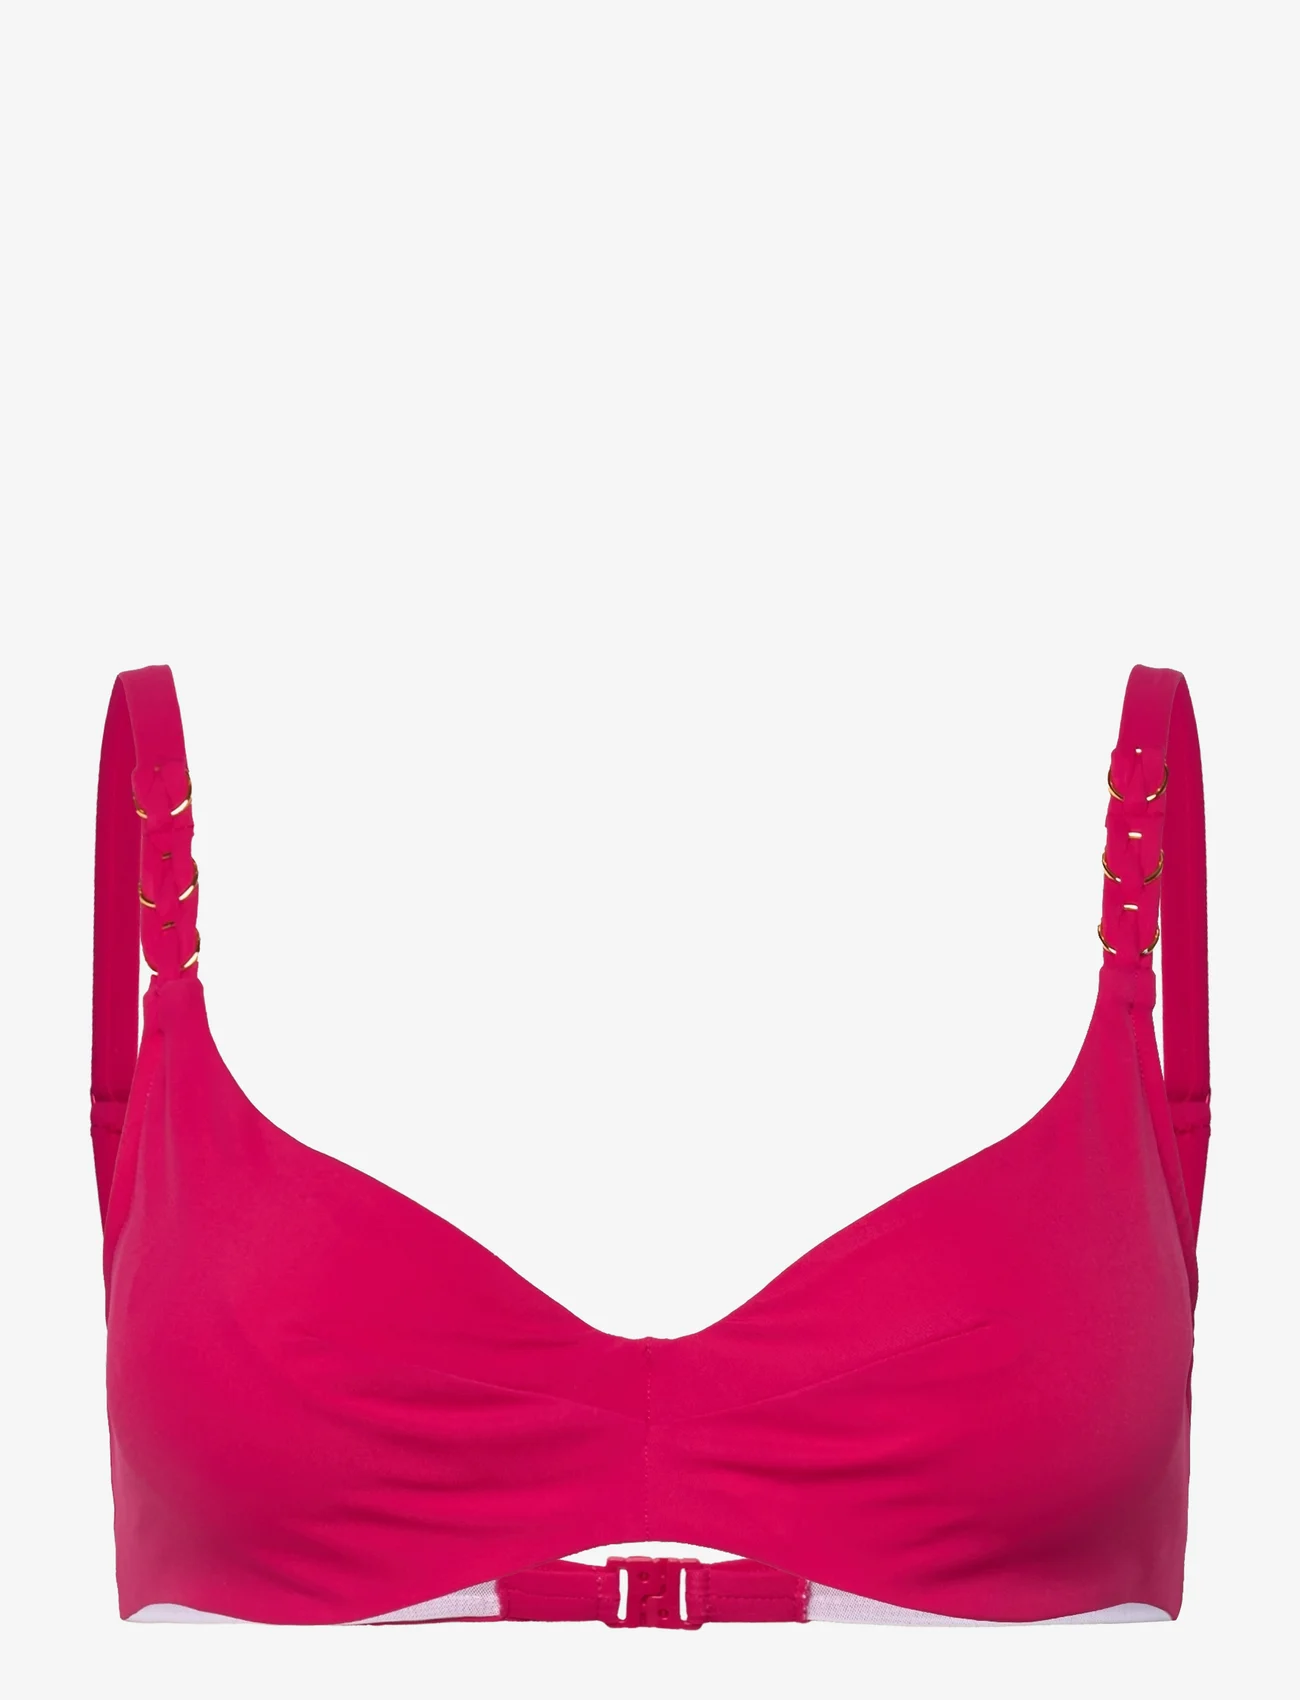 Chantelle Beach - Emblem Bikini Covering underwired bra - bikinitoppe med bøjle - cybele pink - 0